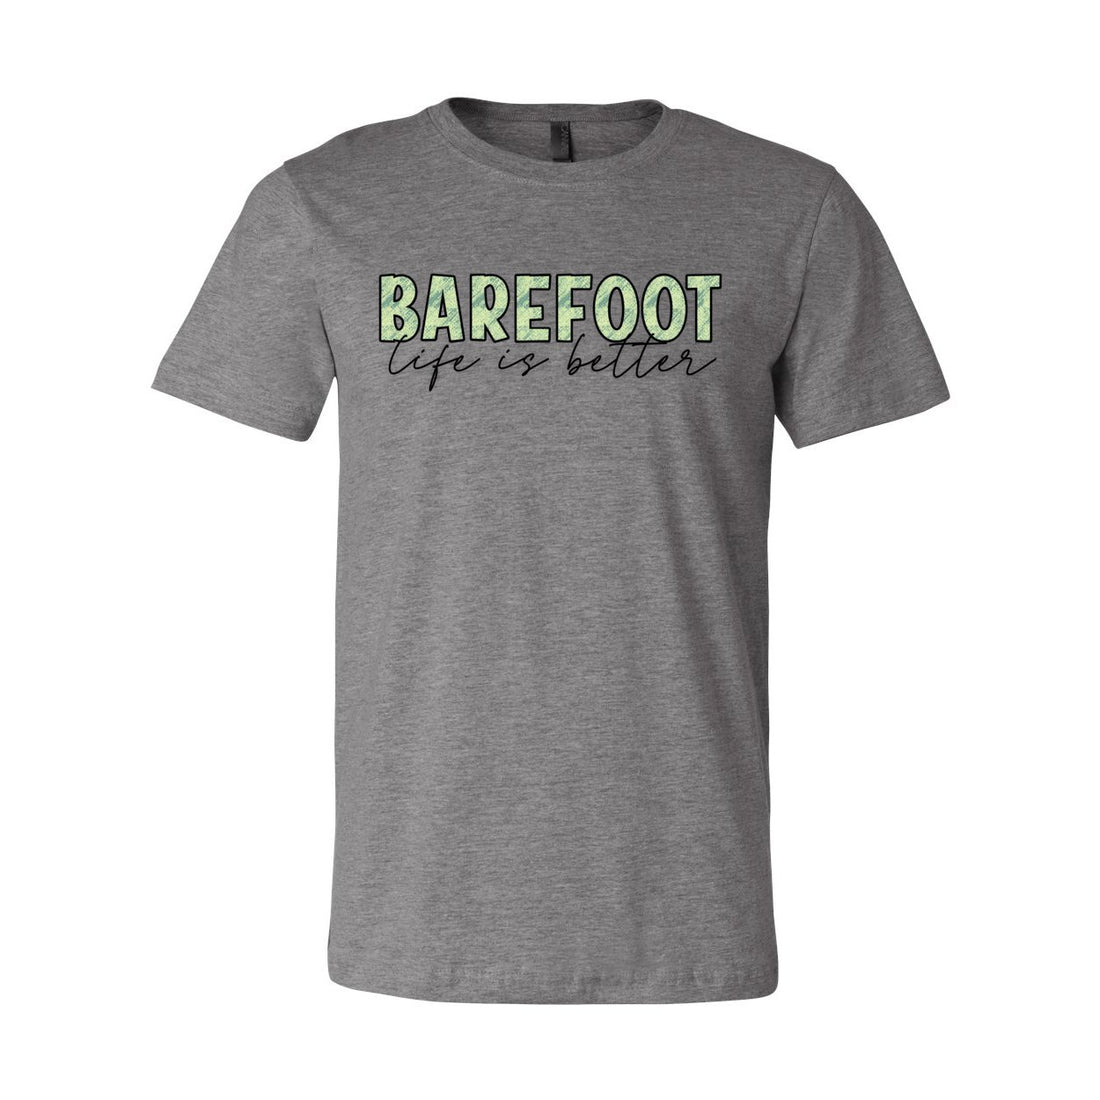 Barefoot Life Short Sleeve Jersey Tee - T-Shirts - Positively Sassy - Barefoot Life Short Sleeve Jersey Tee